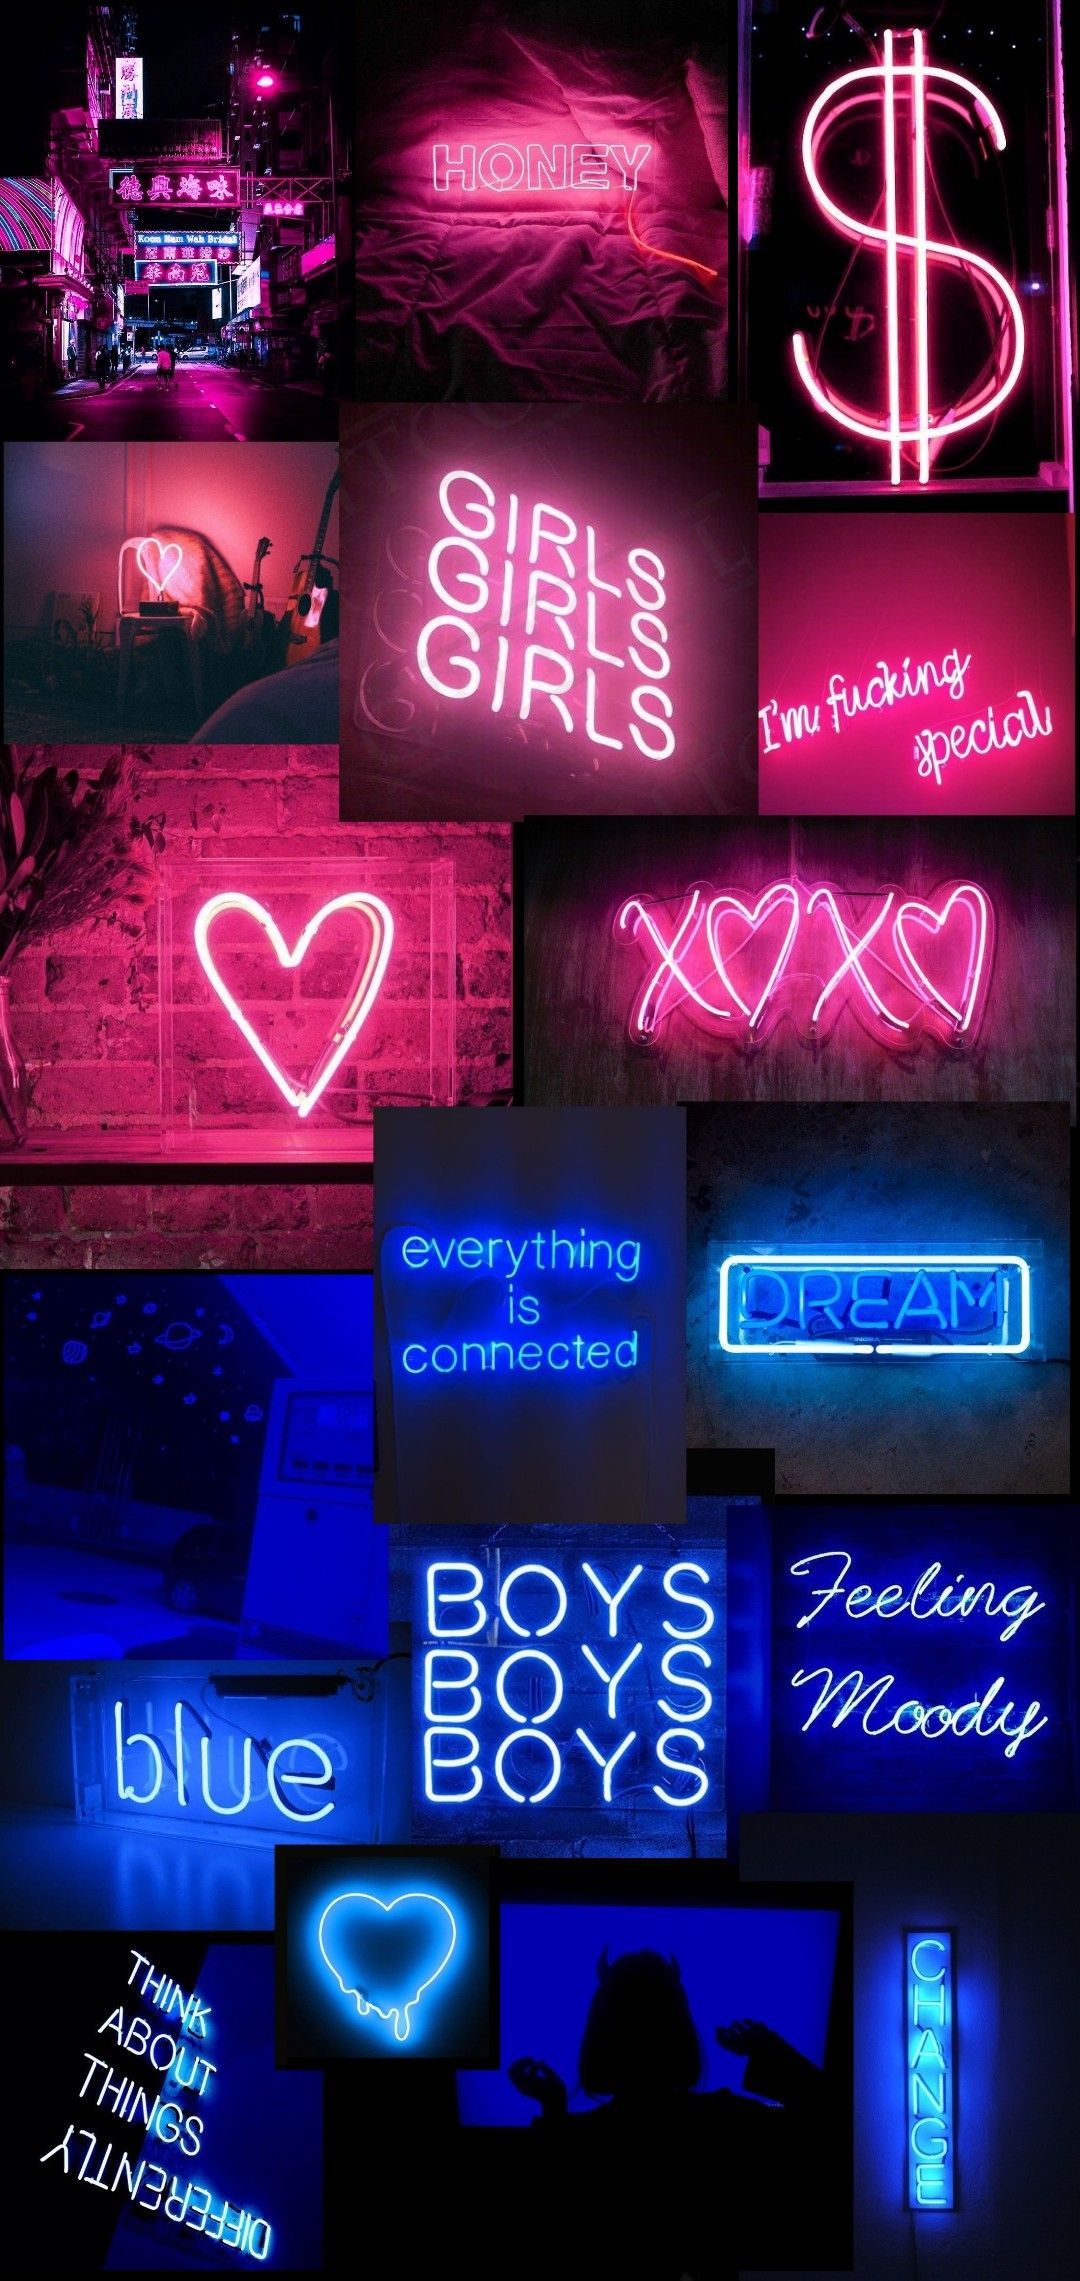 Aesthetic neon wallpaper for phone backgrounds. - Neon, neon pink, neon blue, hot pink